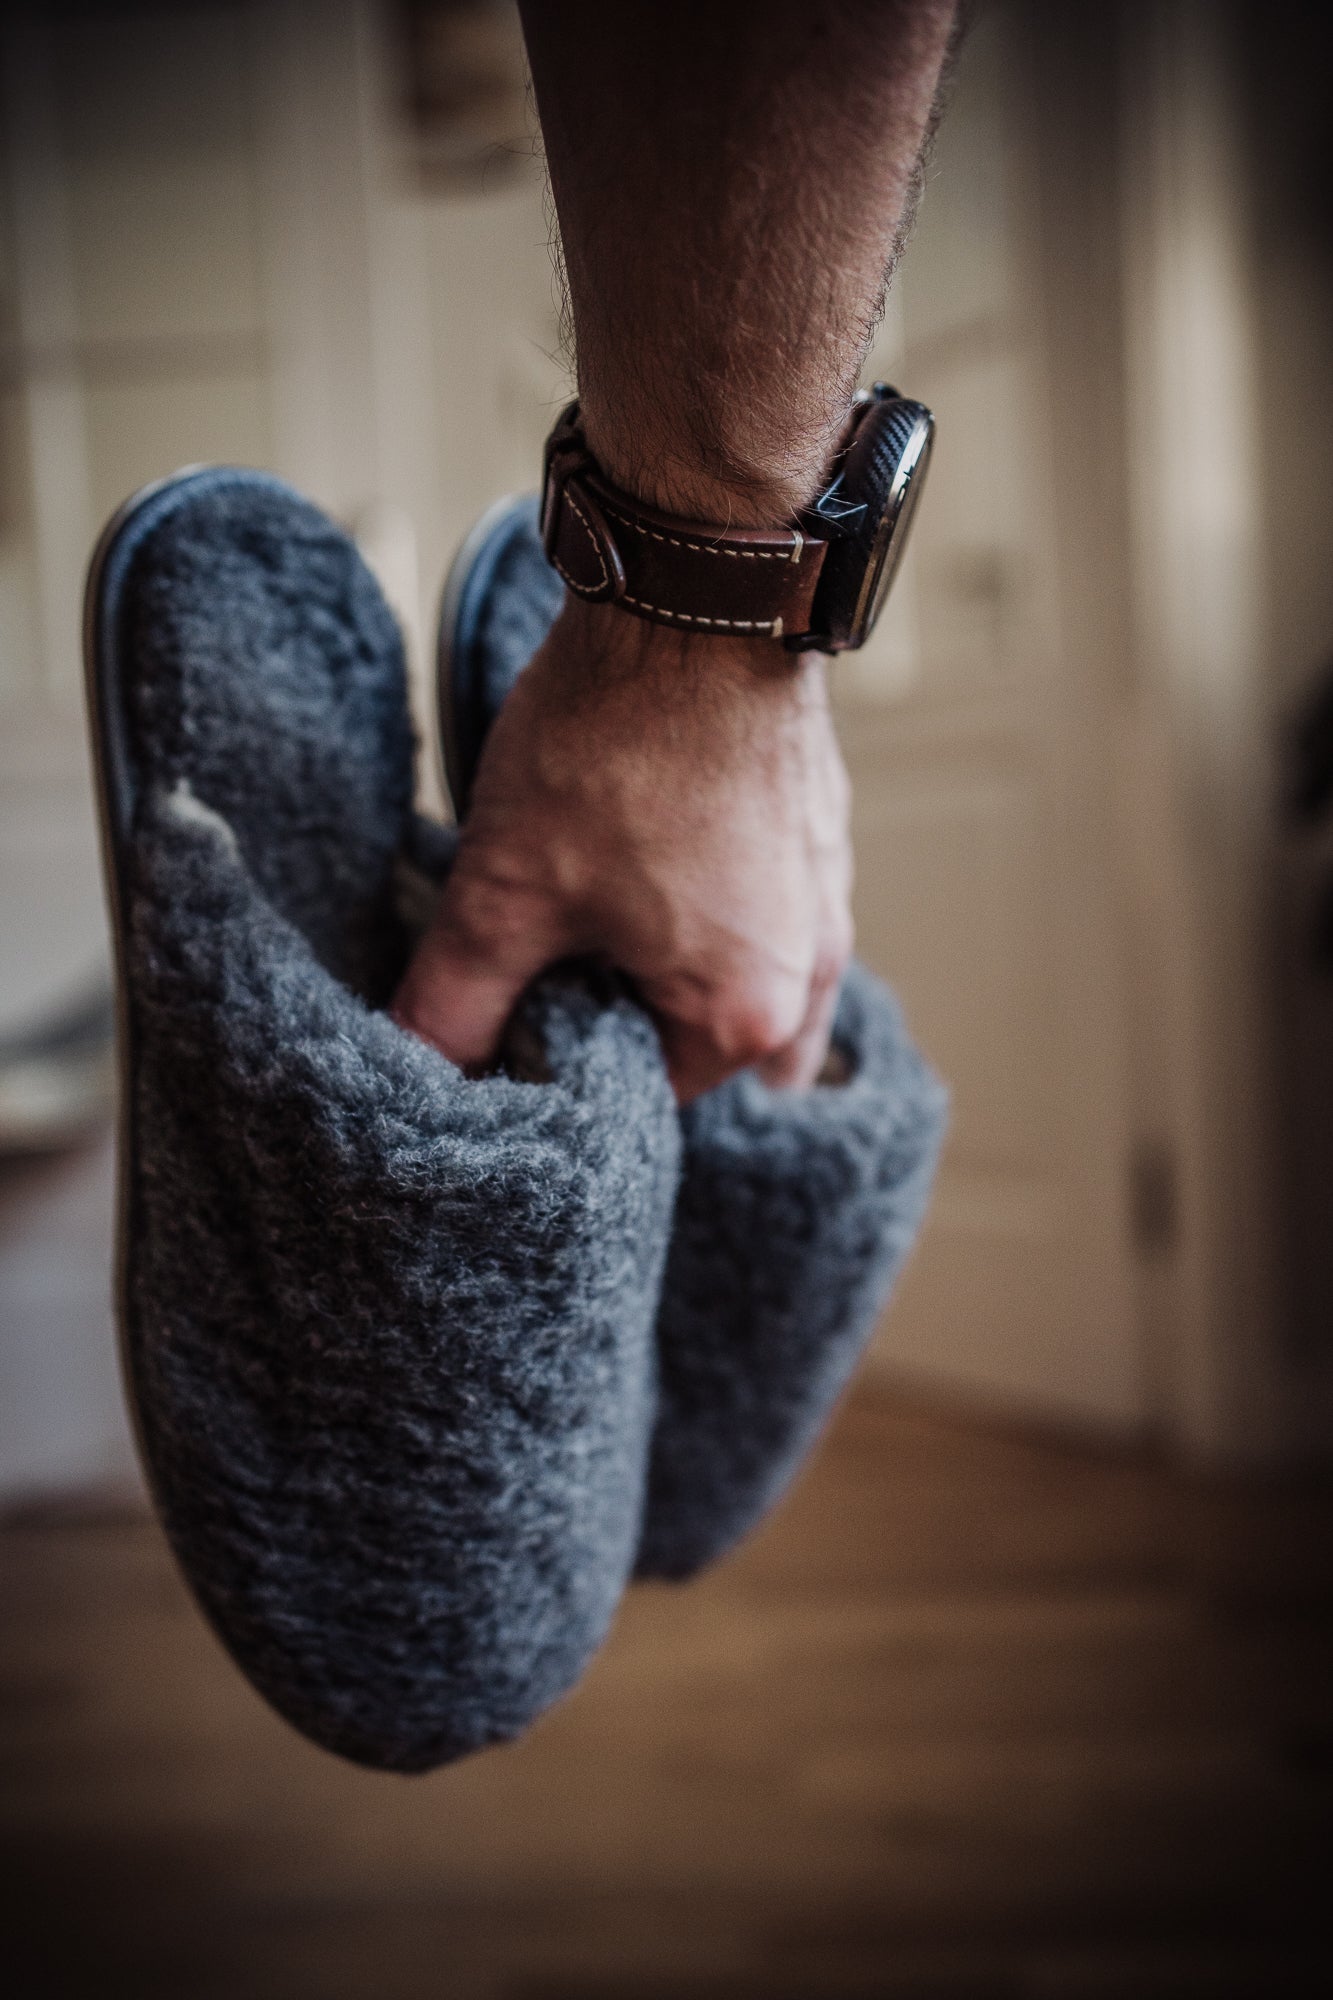 Men's grey wool slippers held in a man's hand